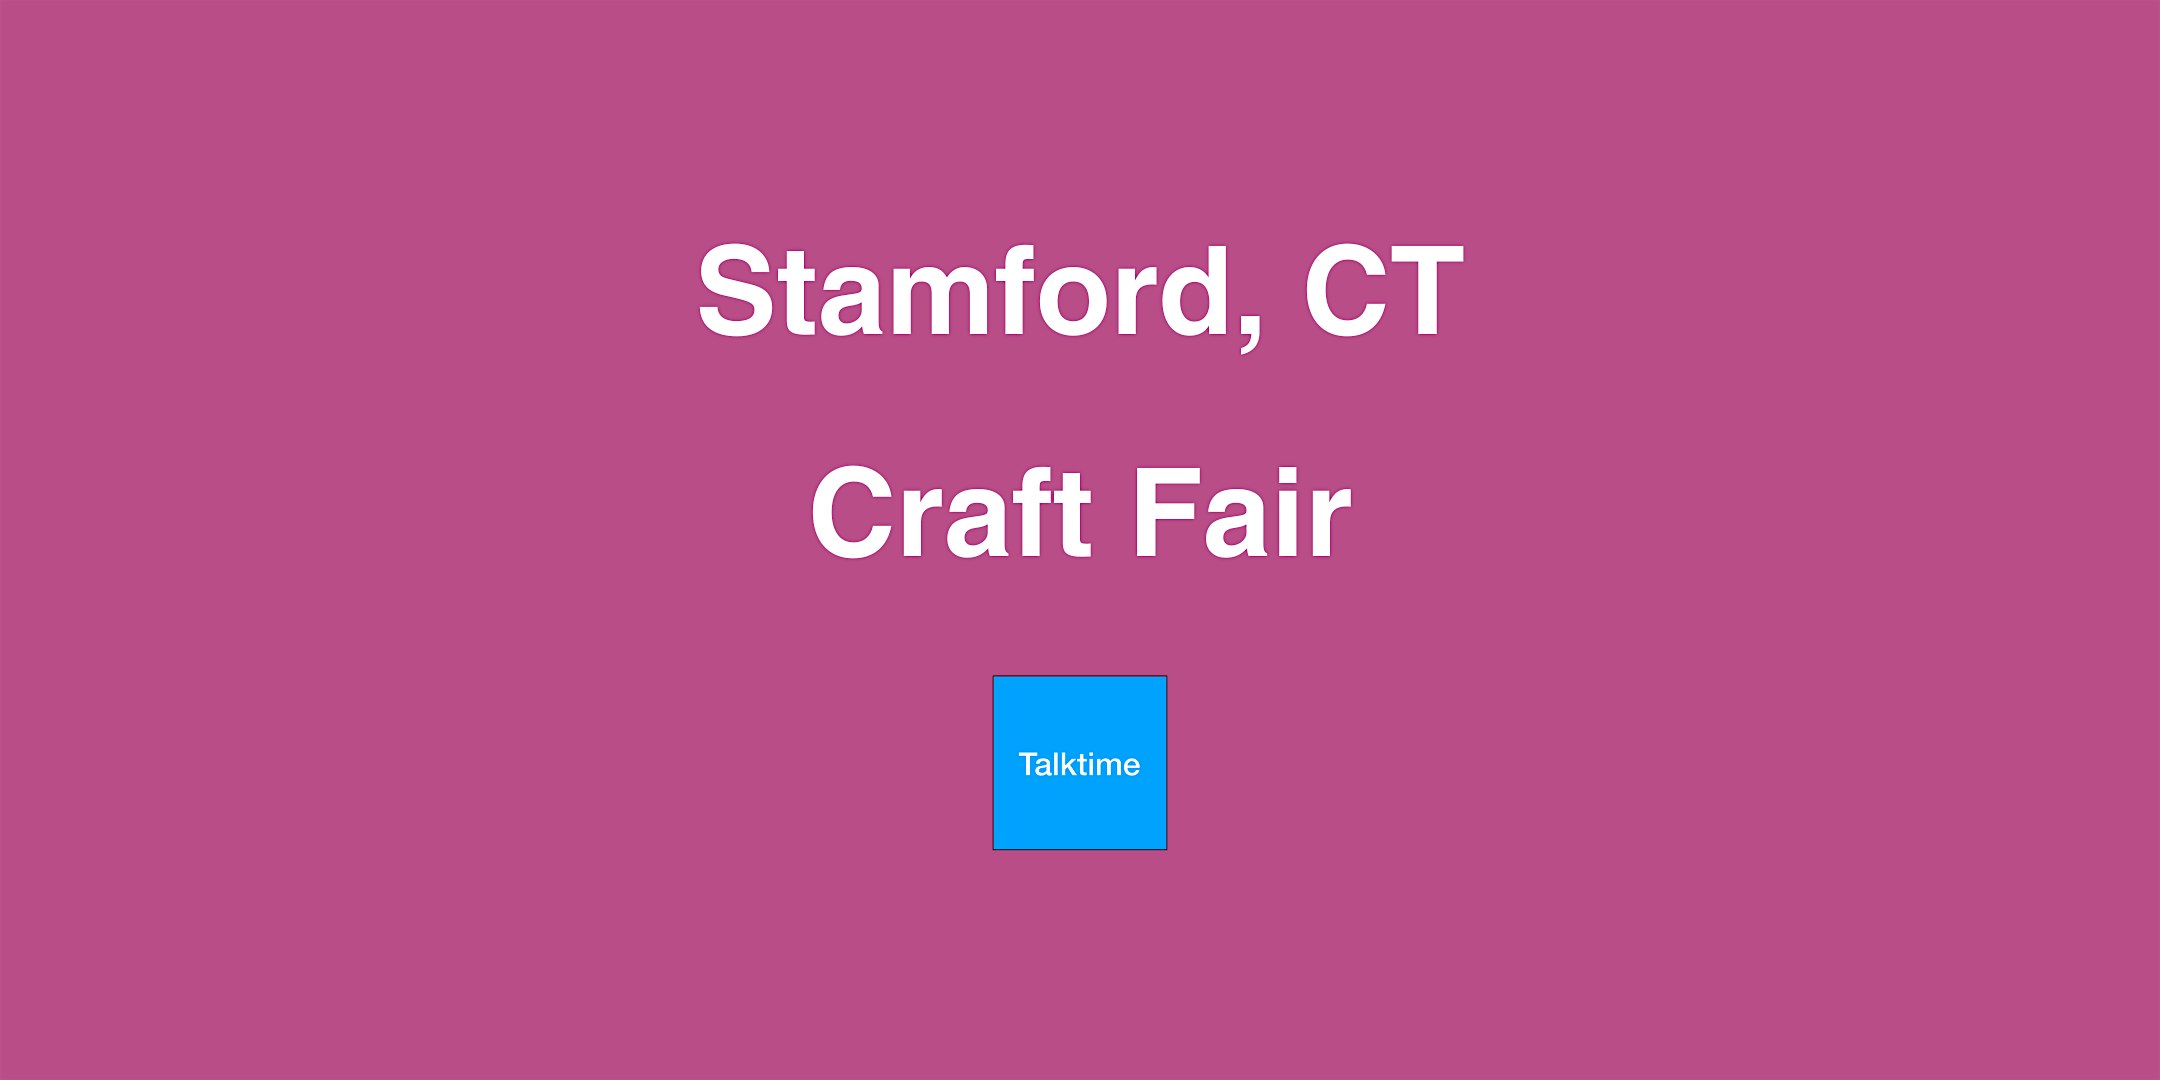 Craft Fair - Stamford